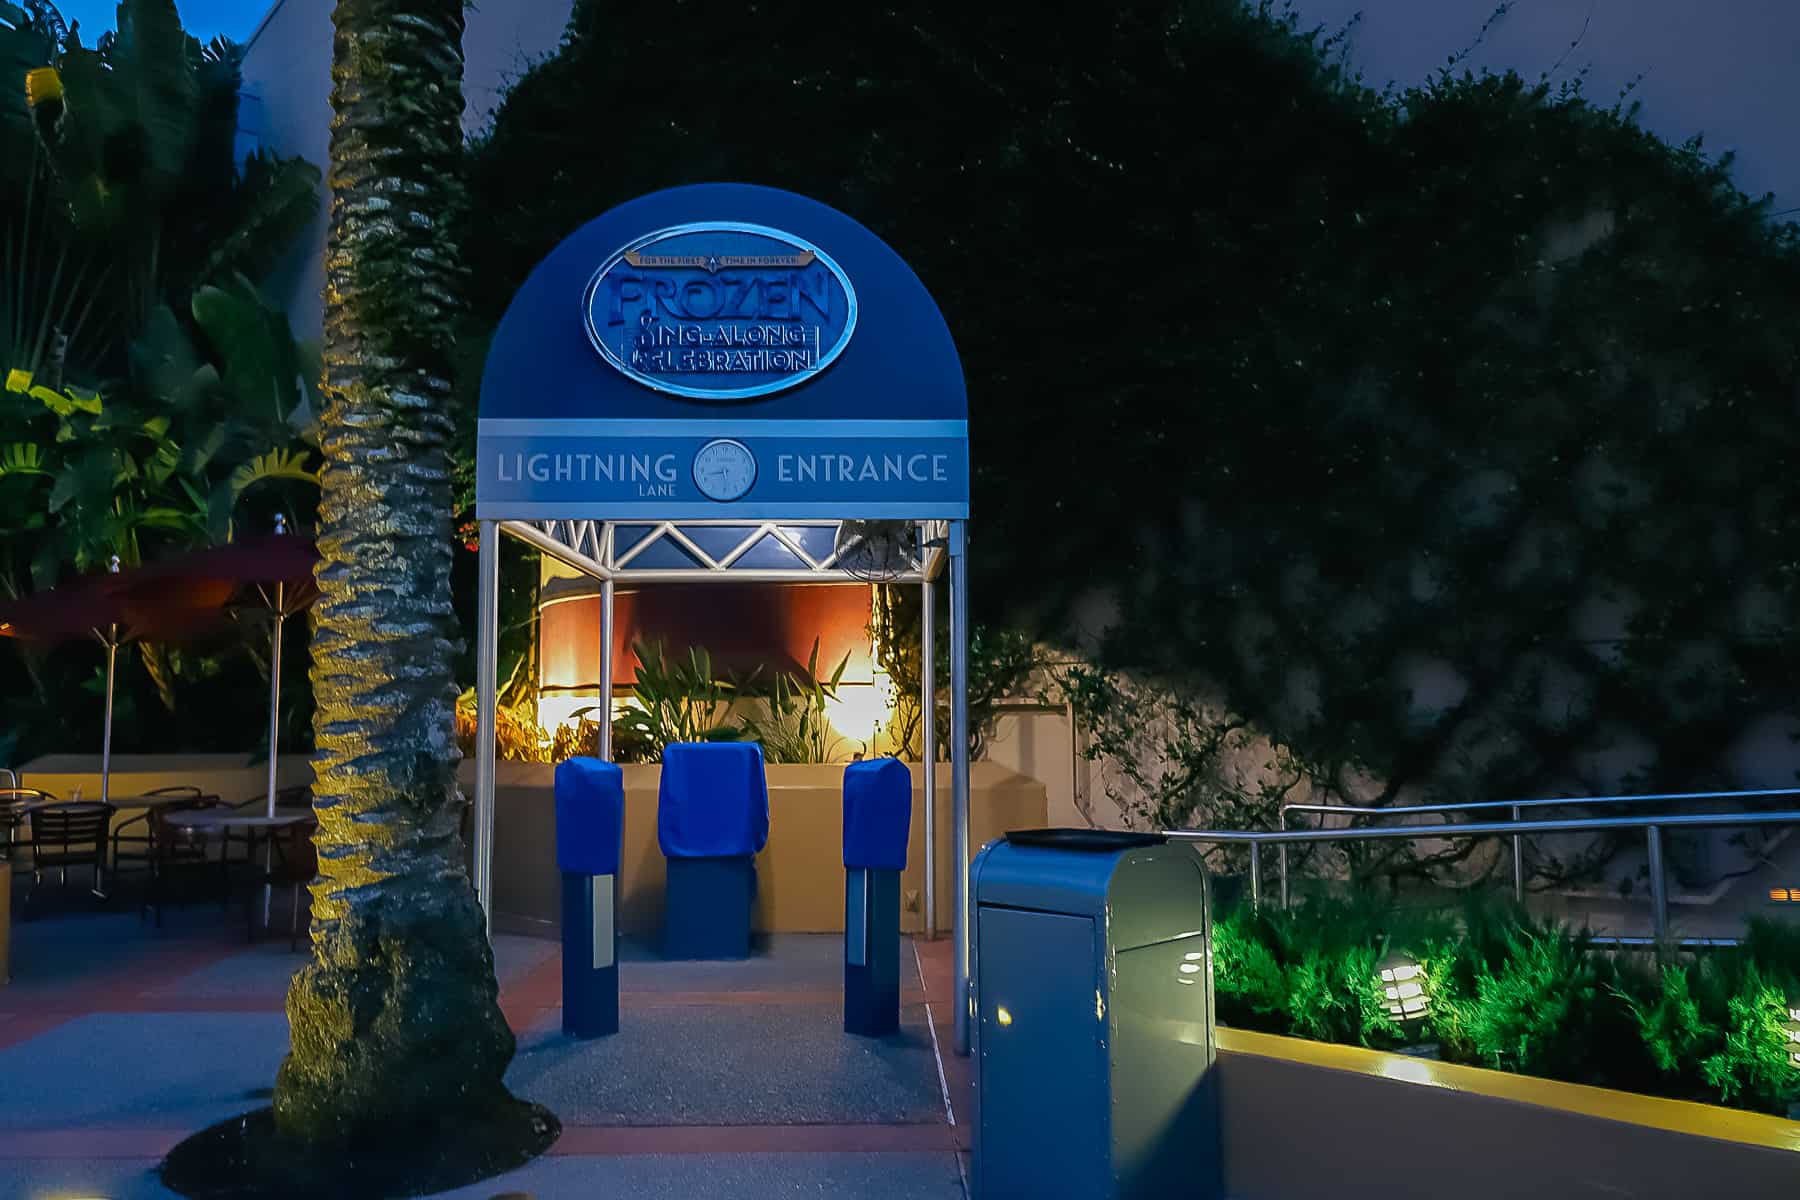 Lightning Lane Entrance for the Frozen Sing Along at Disney's Hollywood Studios 